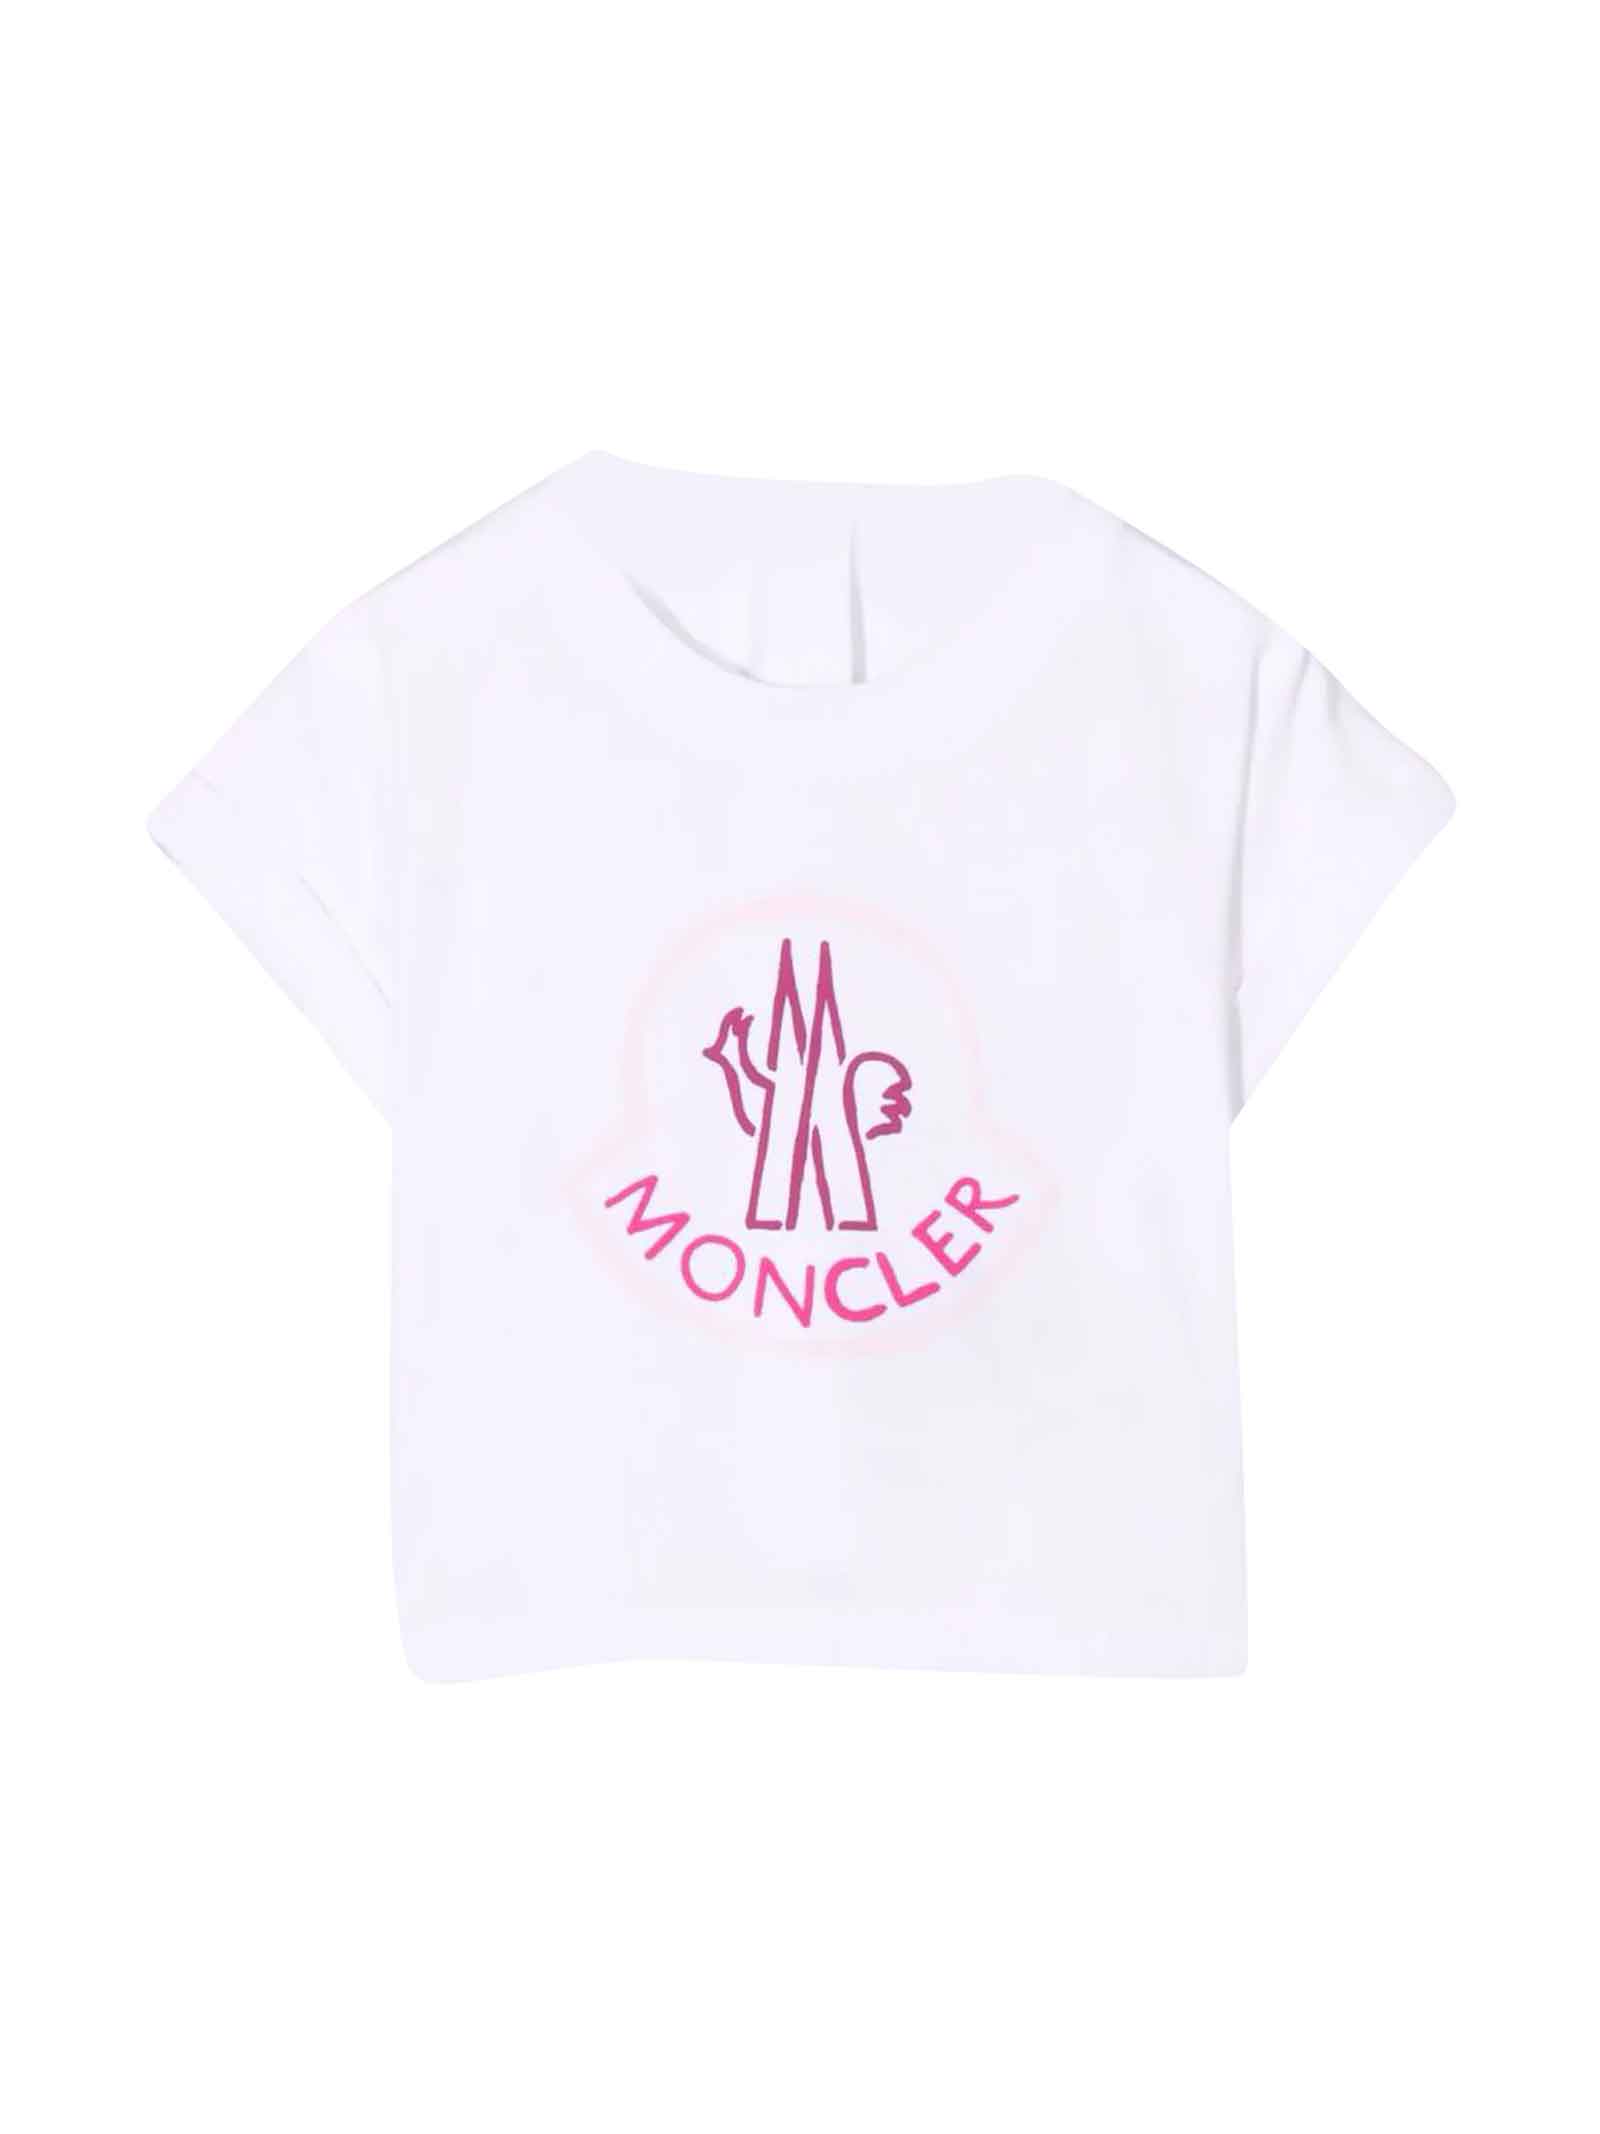 Moncler White T-shirt Baby Unisex